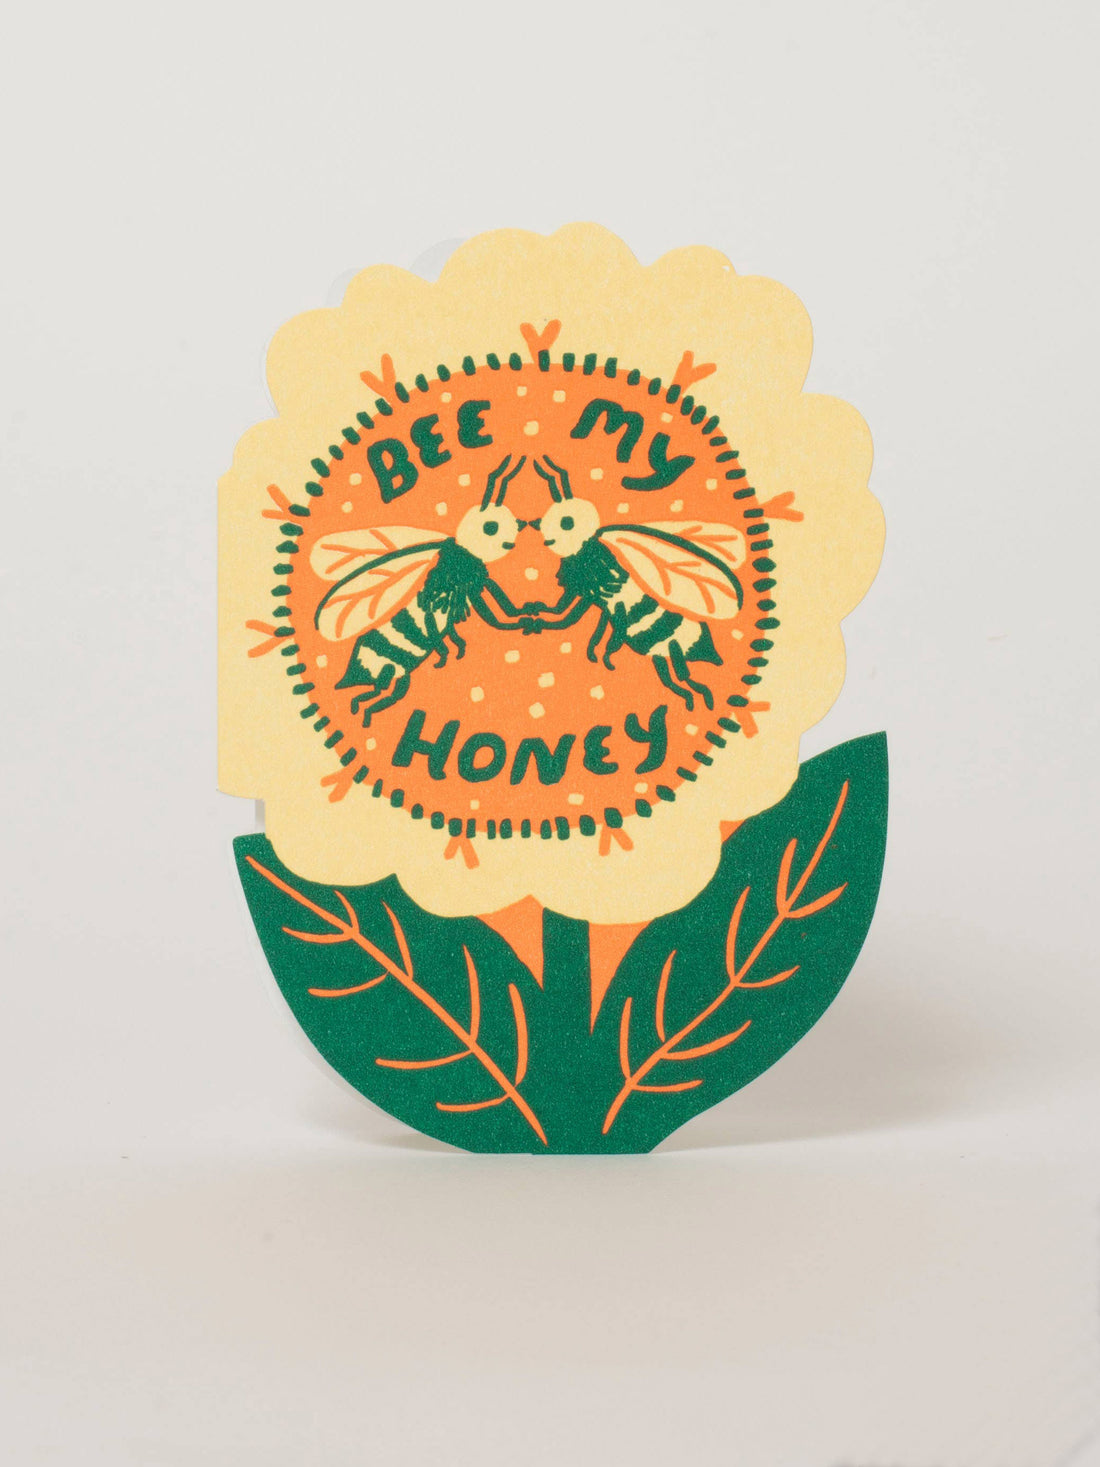 Bee My Honey Card